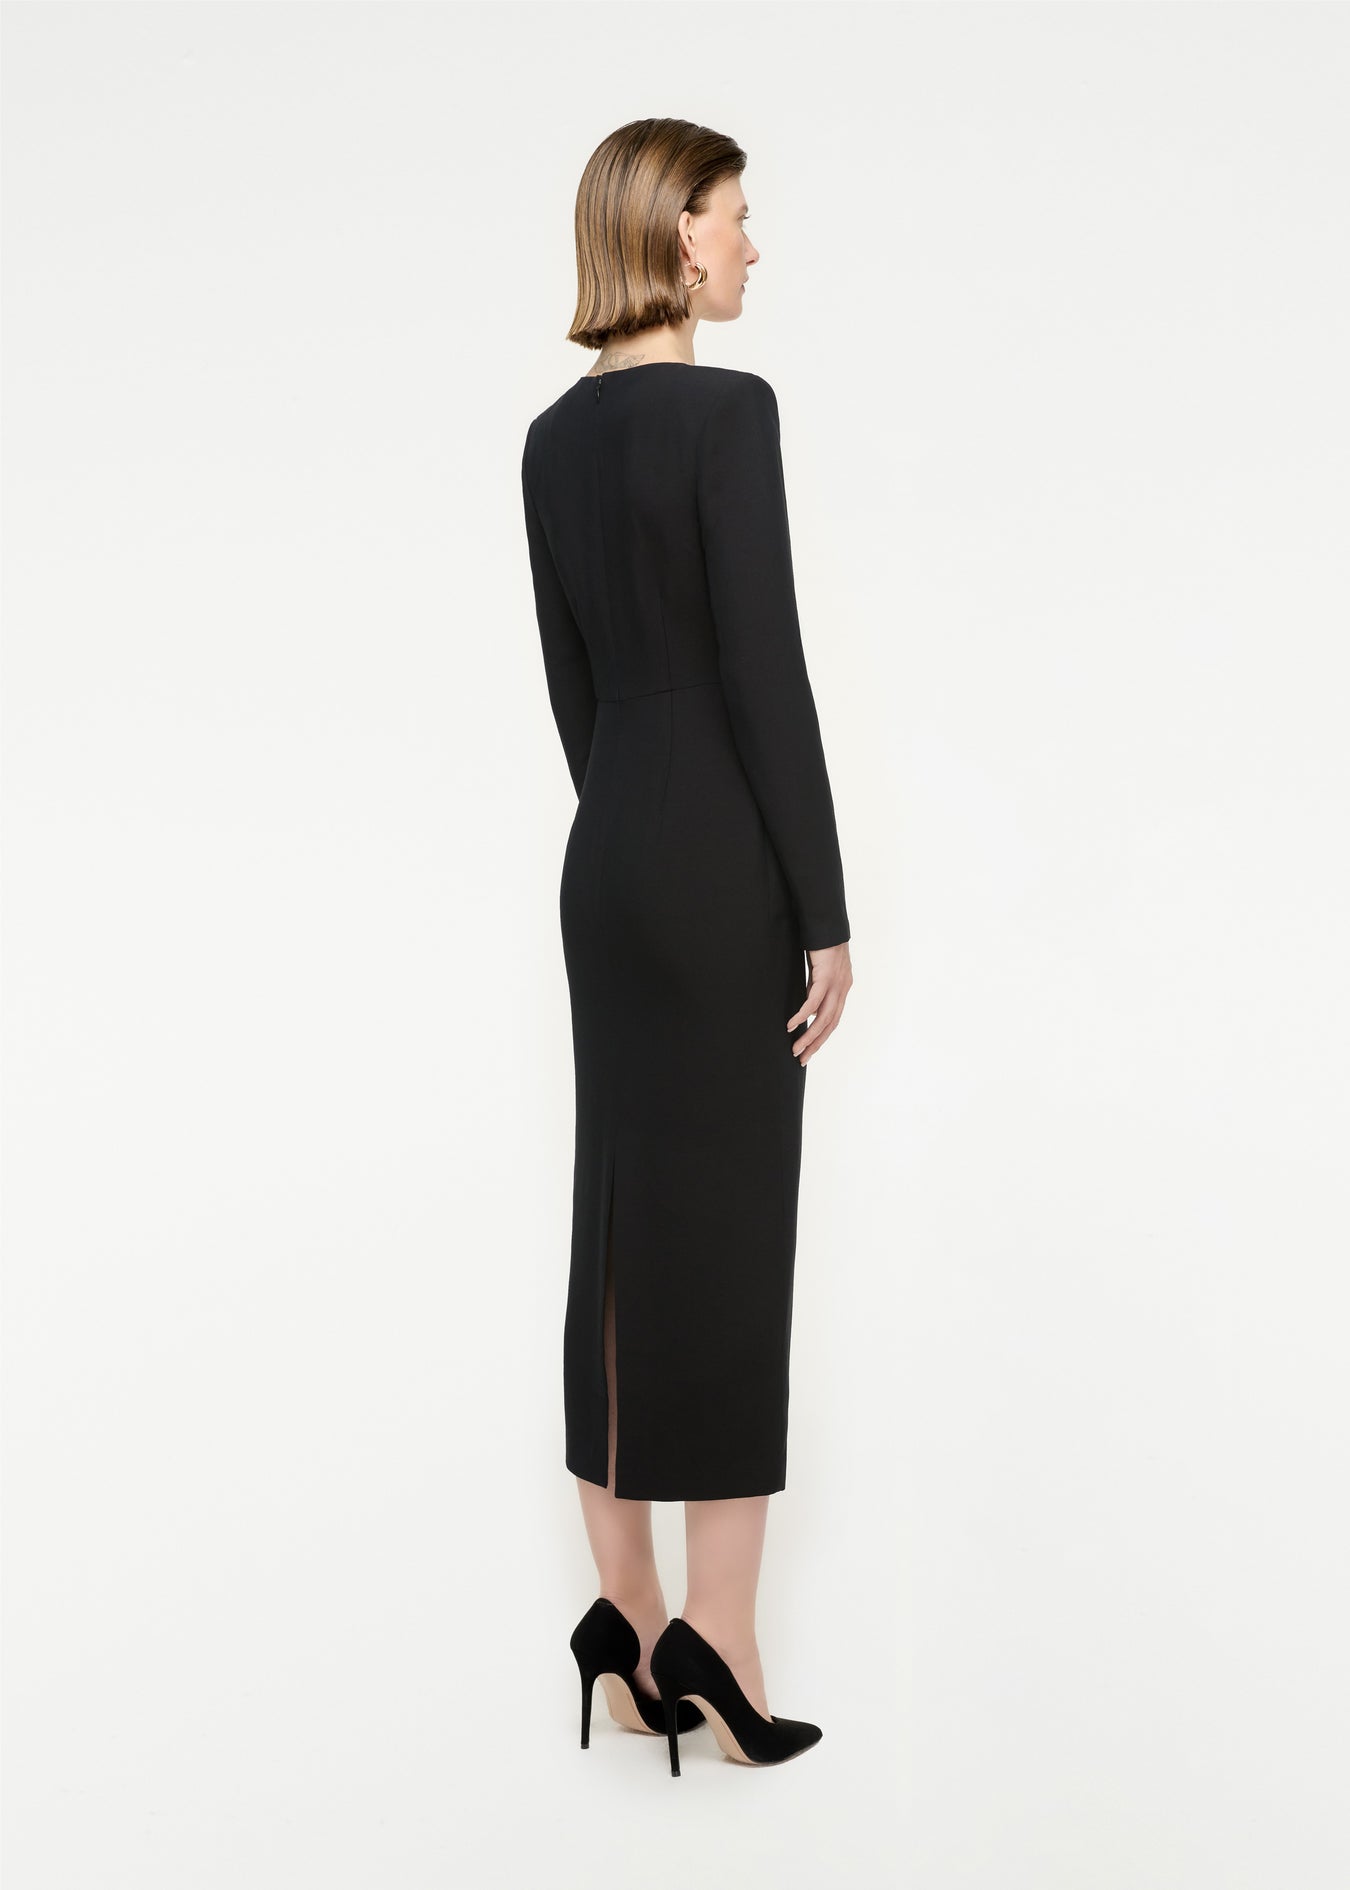 The back of a woman wearing the Long Sleeve Wool Silk Midi Dress in Black